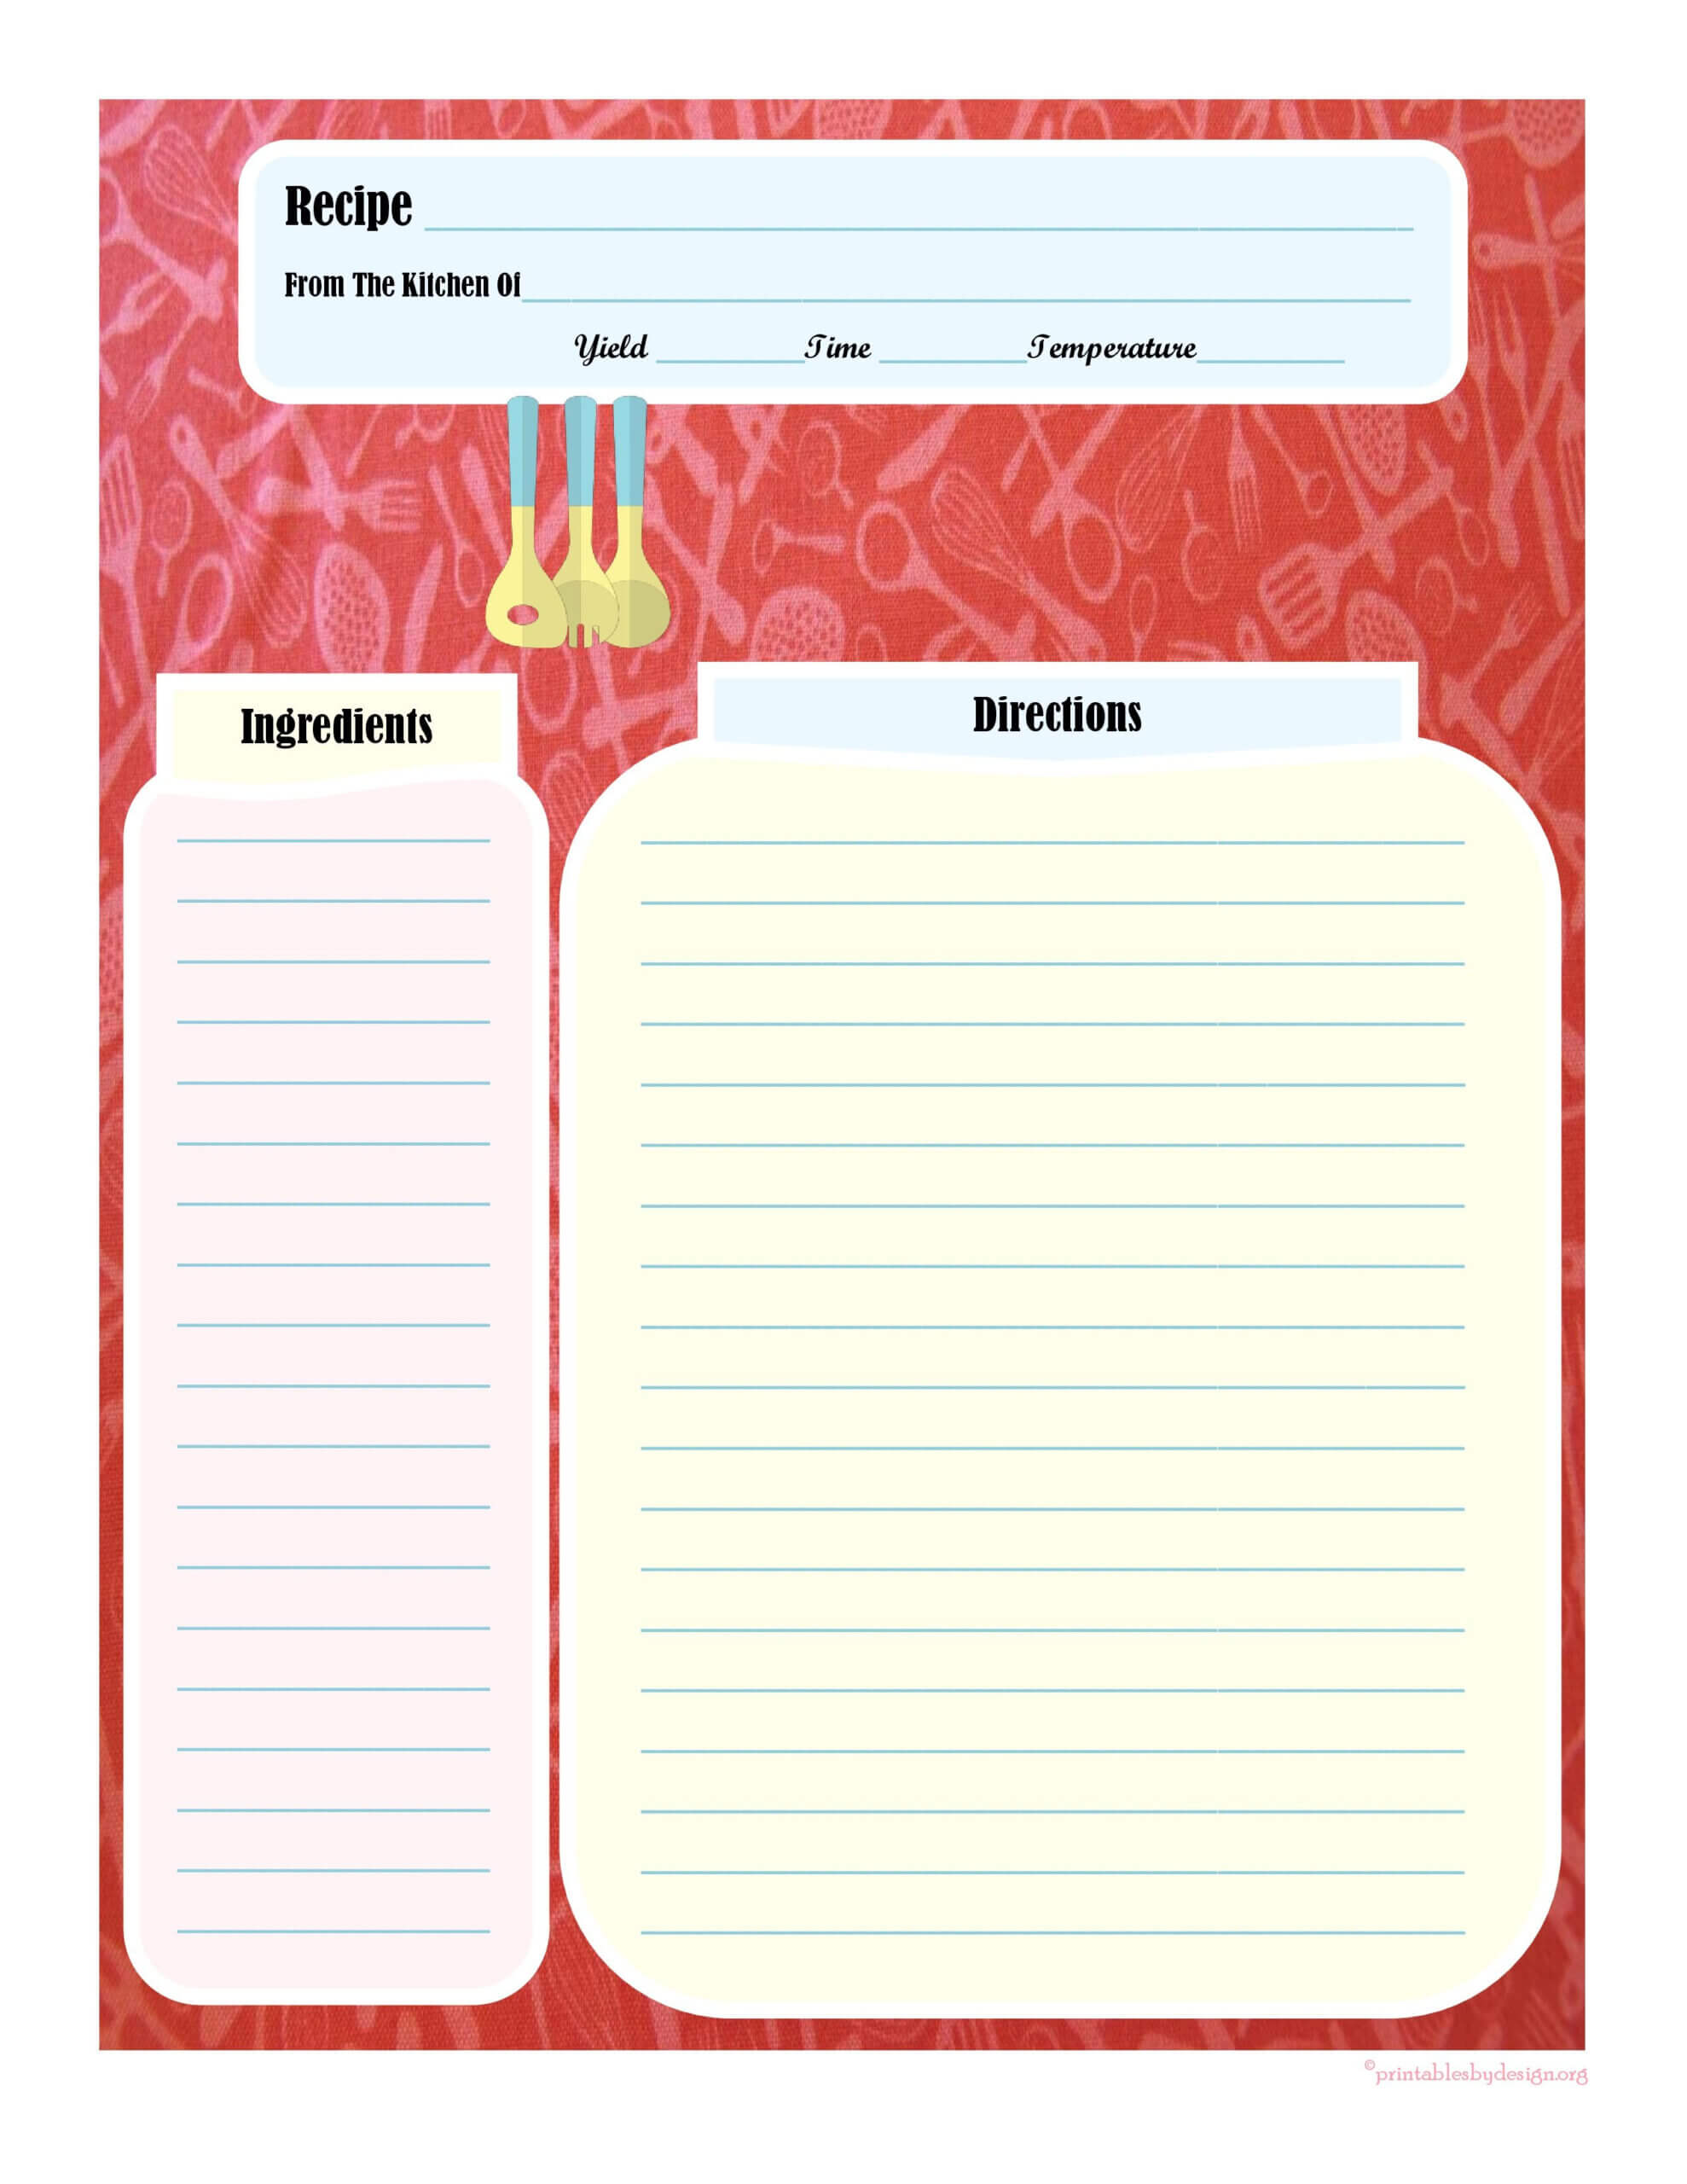 Full Page Recipe Card | Printable Recipe Cards, Cookbook Throughout Recipe Card Design Template